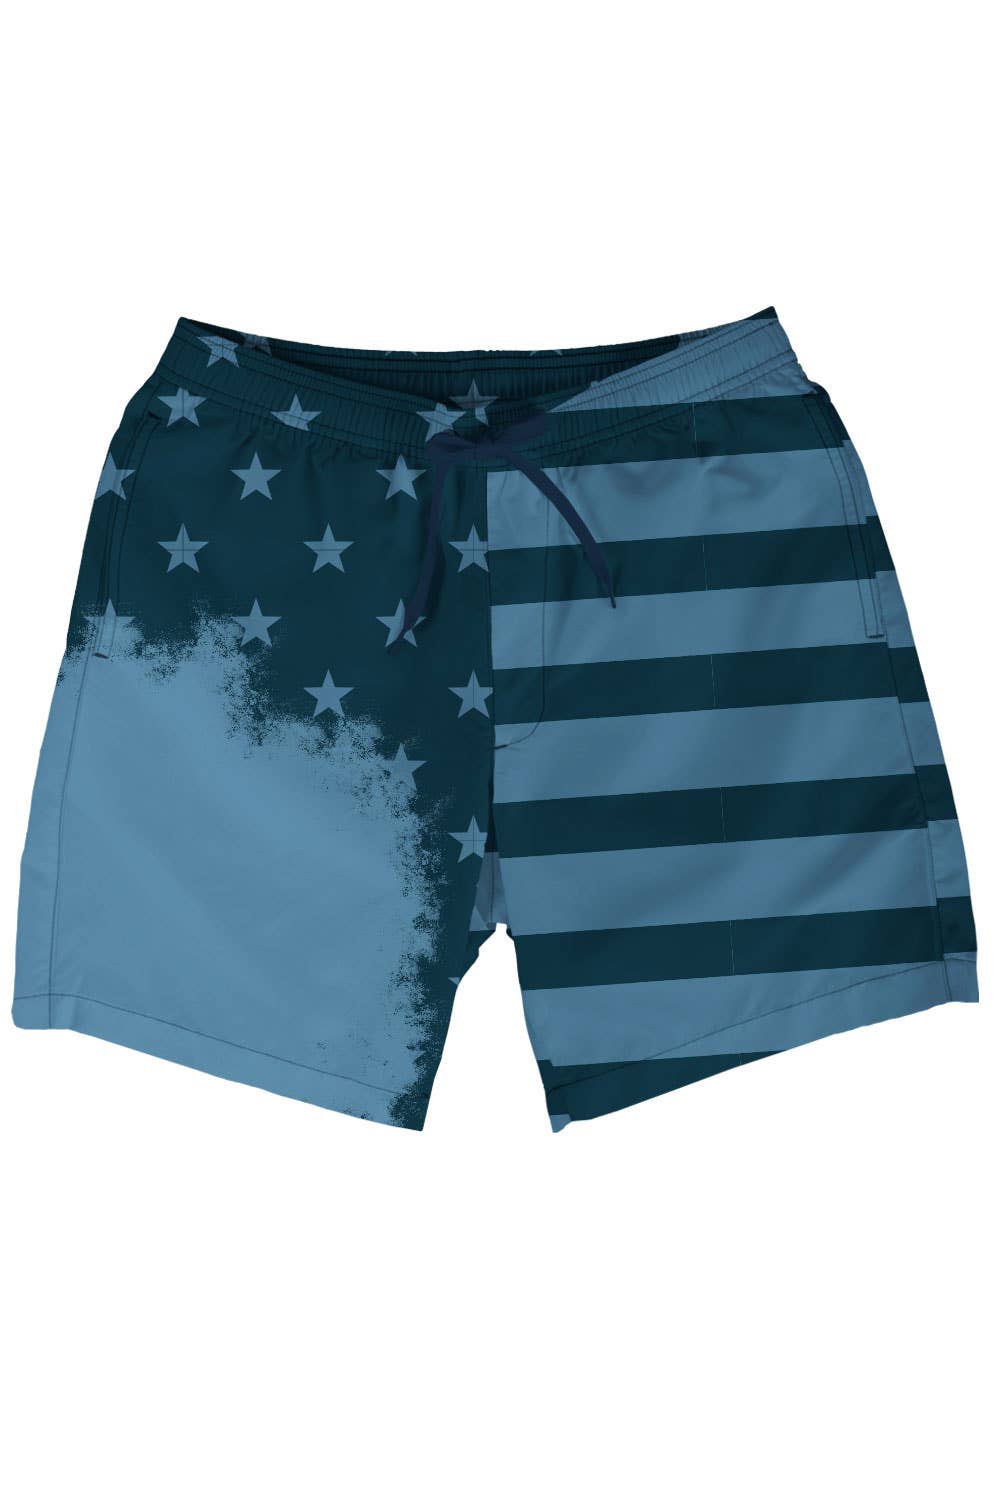 Men's American Flag Color Changing Swim Trunks